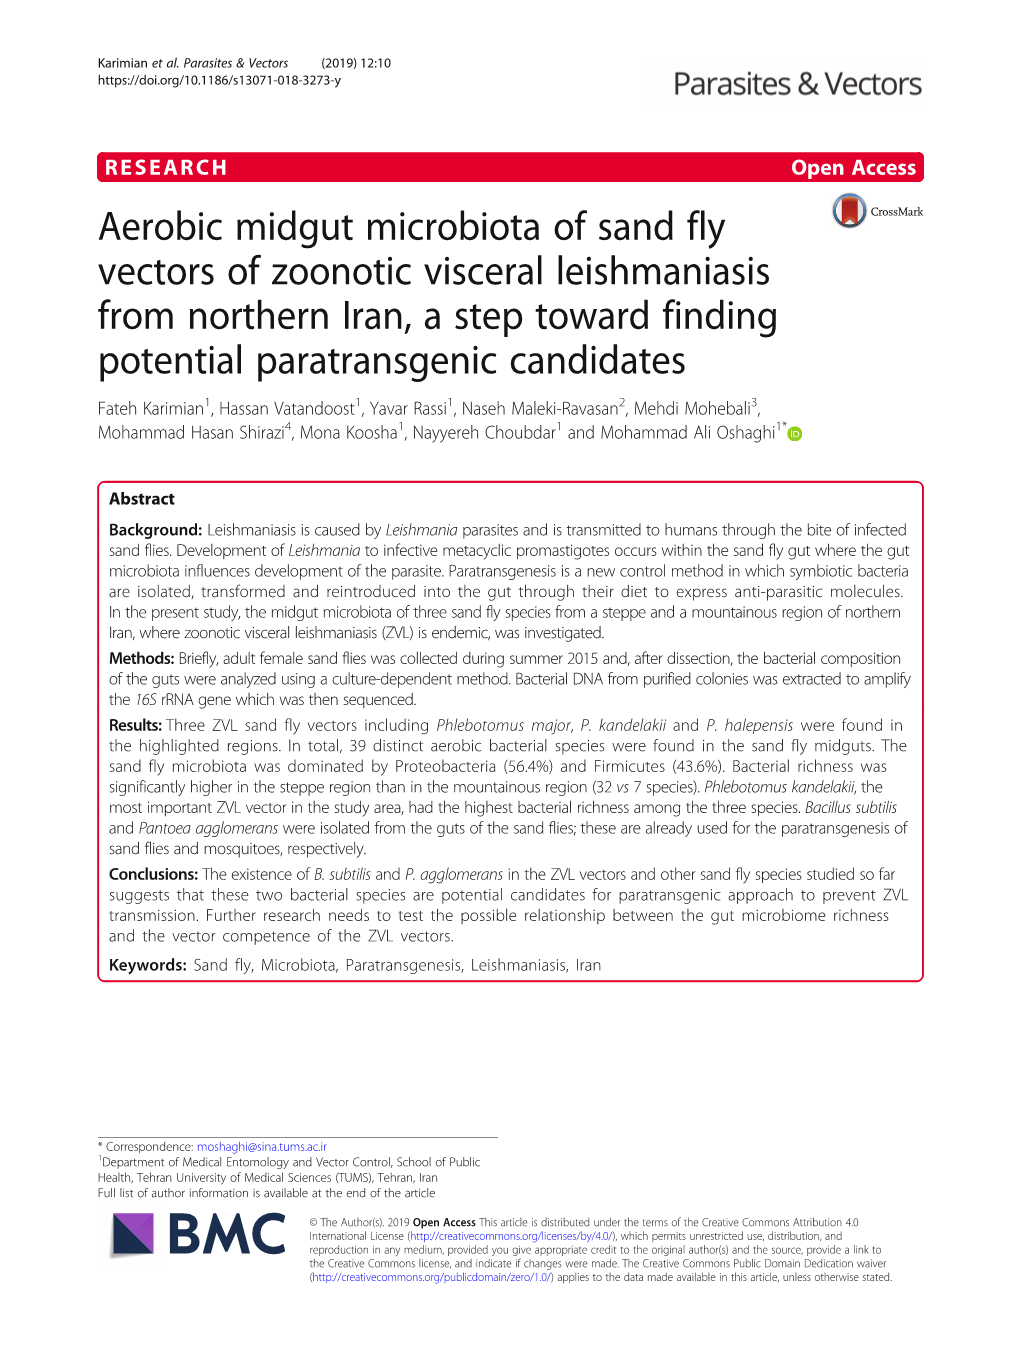 Aerobic Midgut Microbiota of Sand Fly Vectors of Zoonotic Visceral